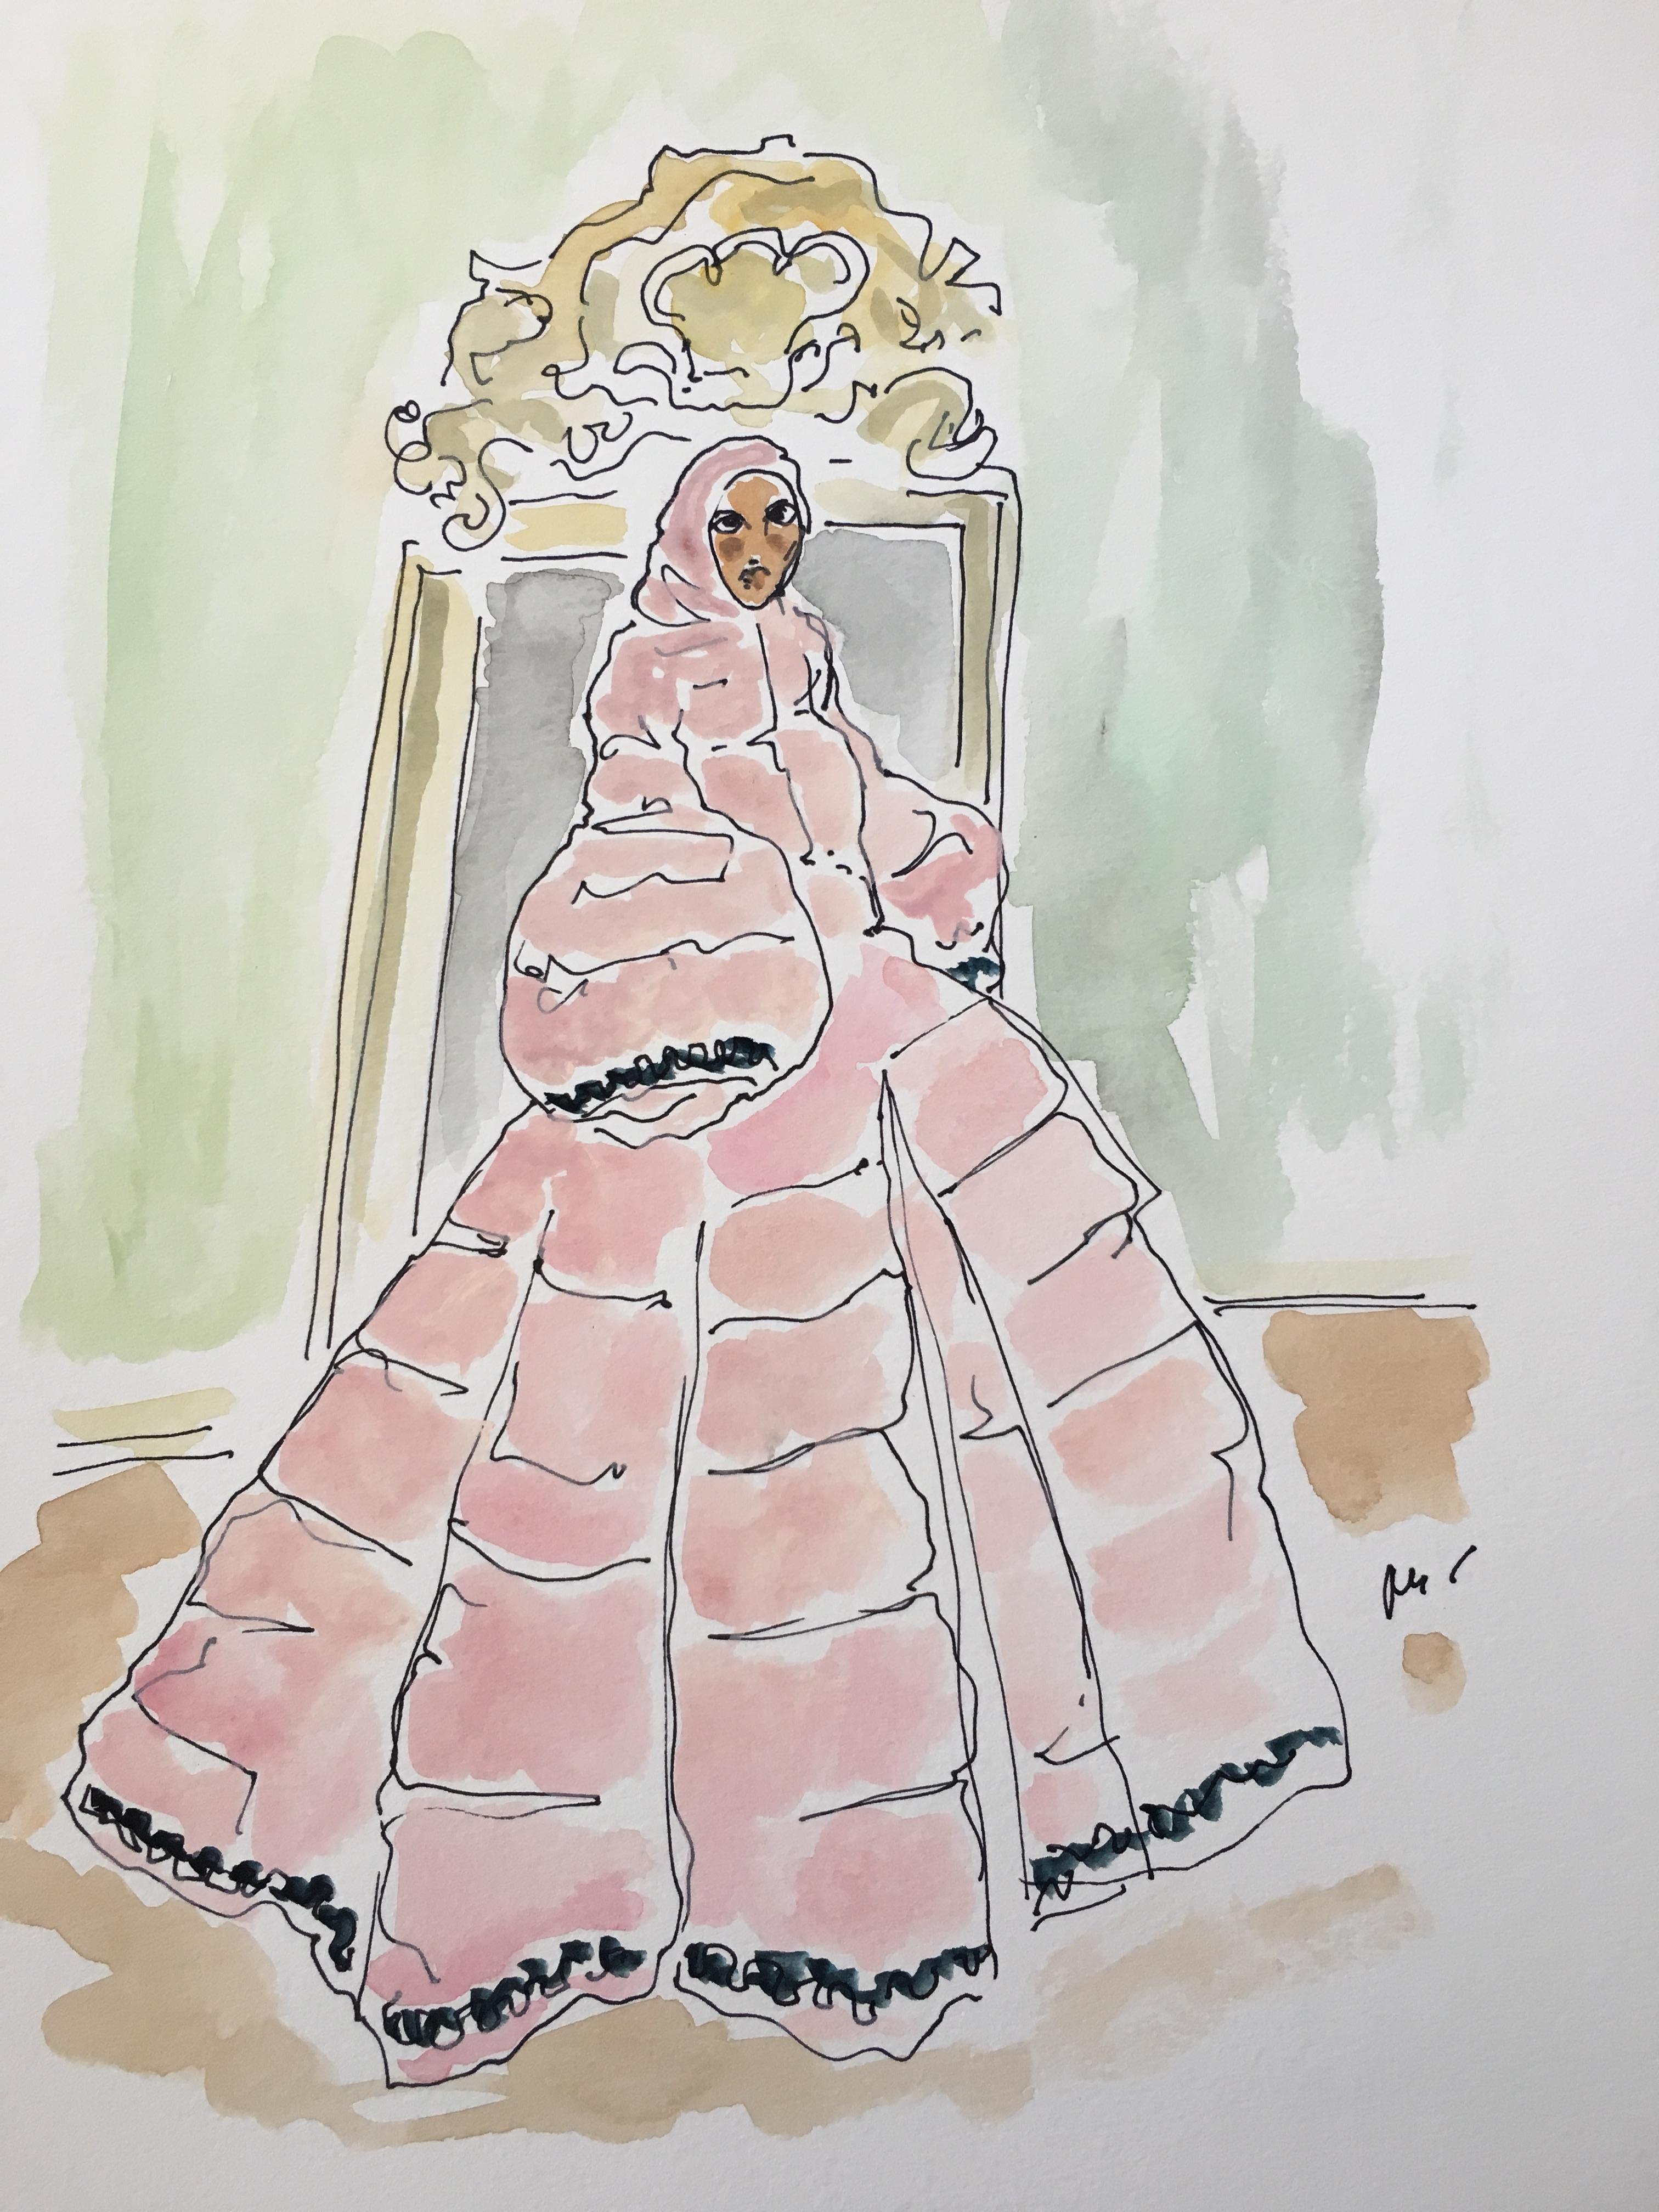 Pierpaolo Piccioli for Moncler, Watercolor fashion illustration on paper.